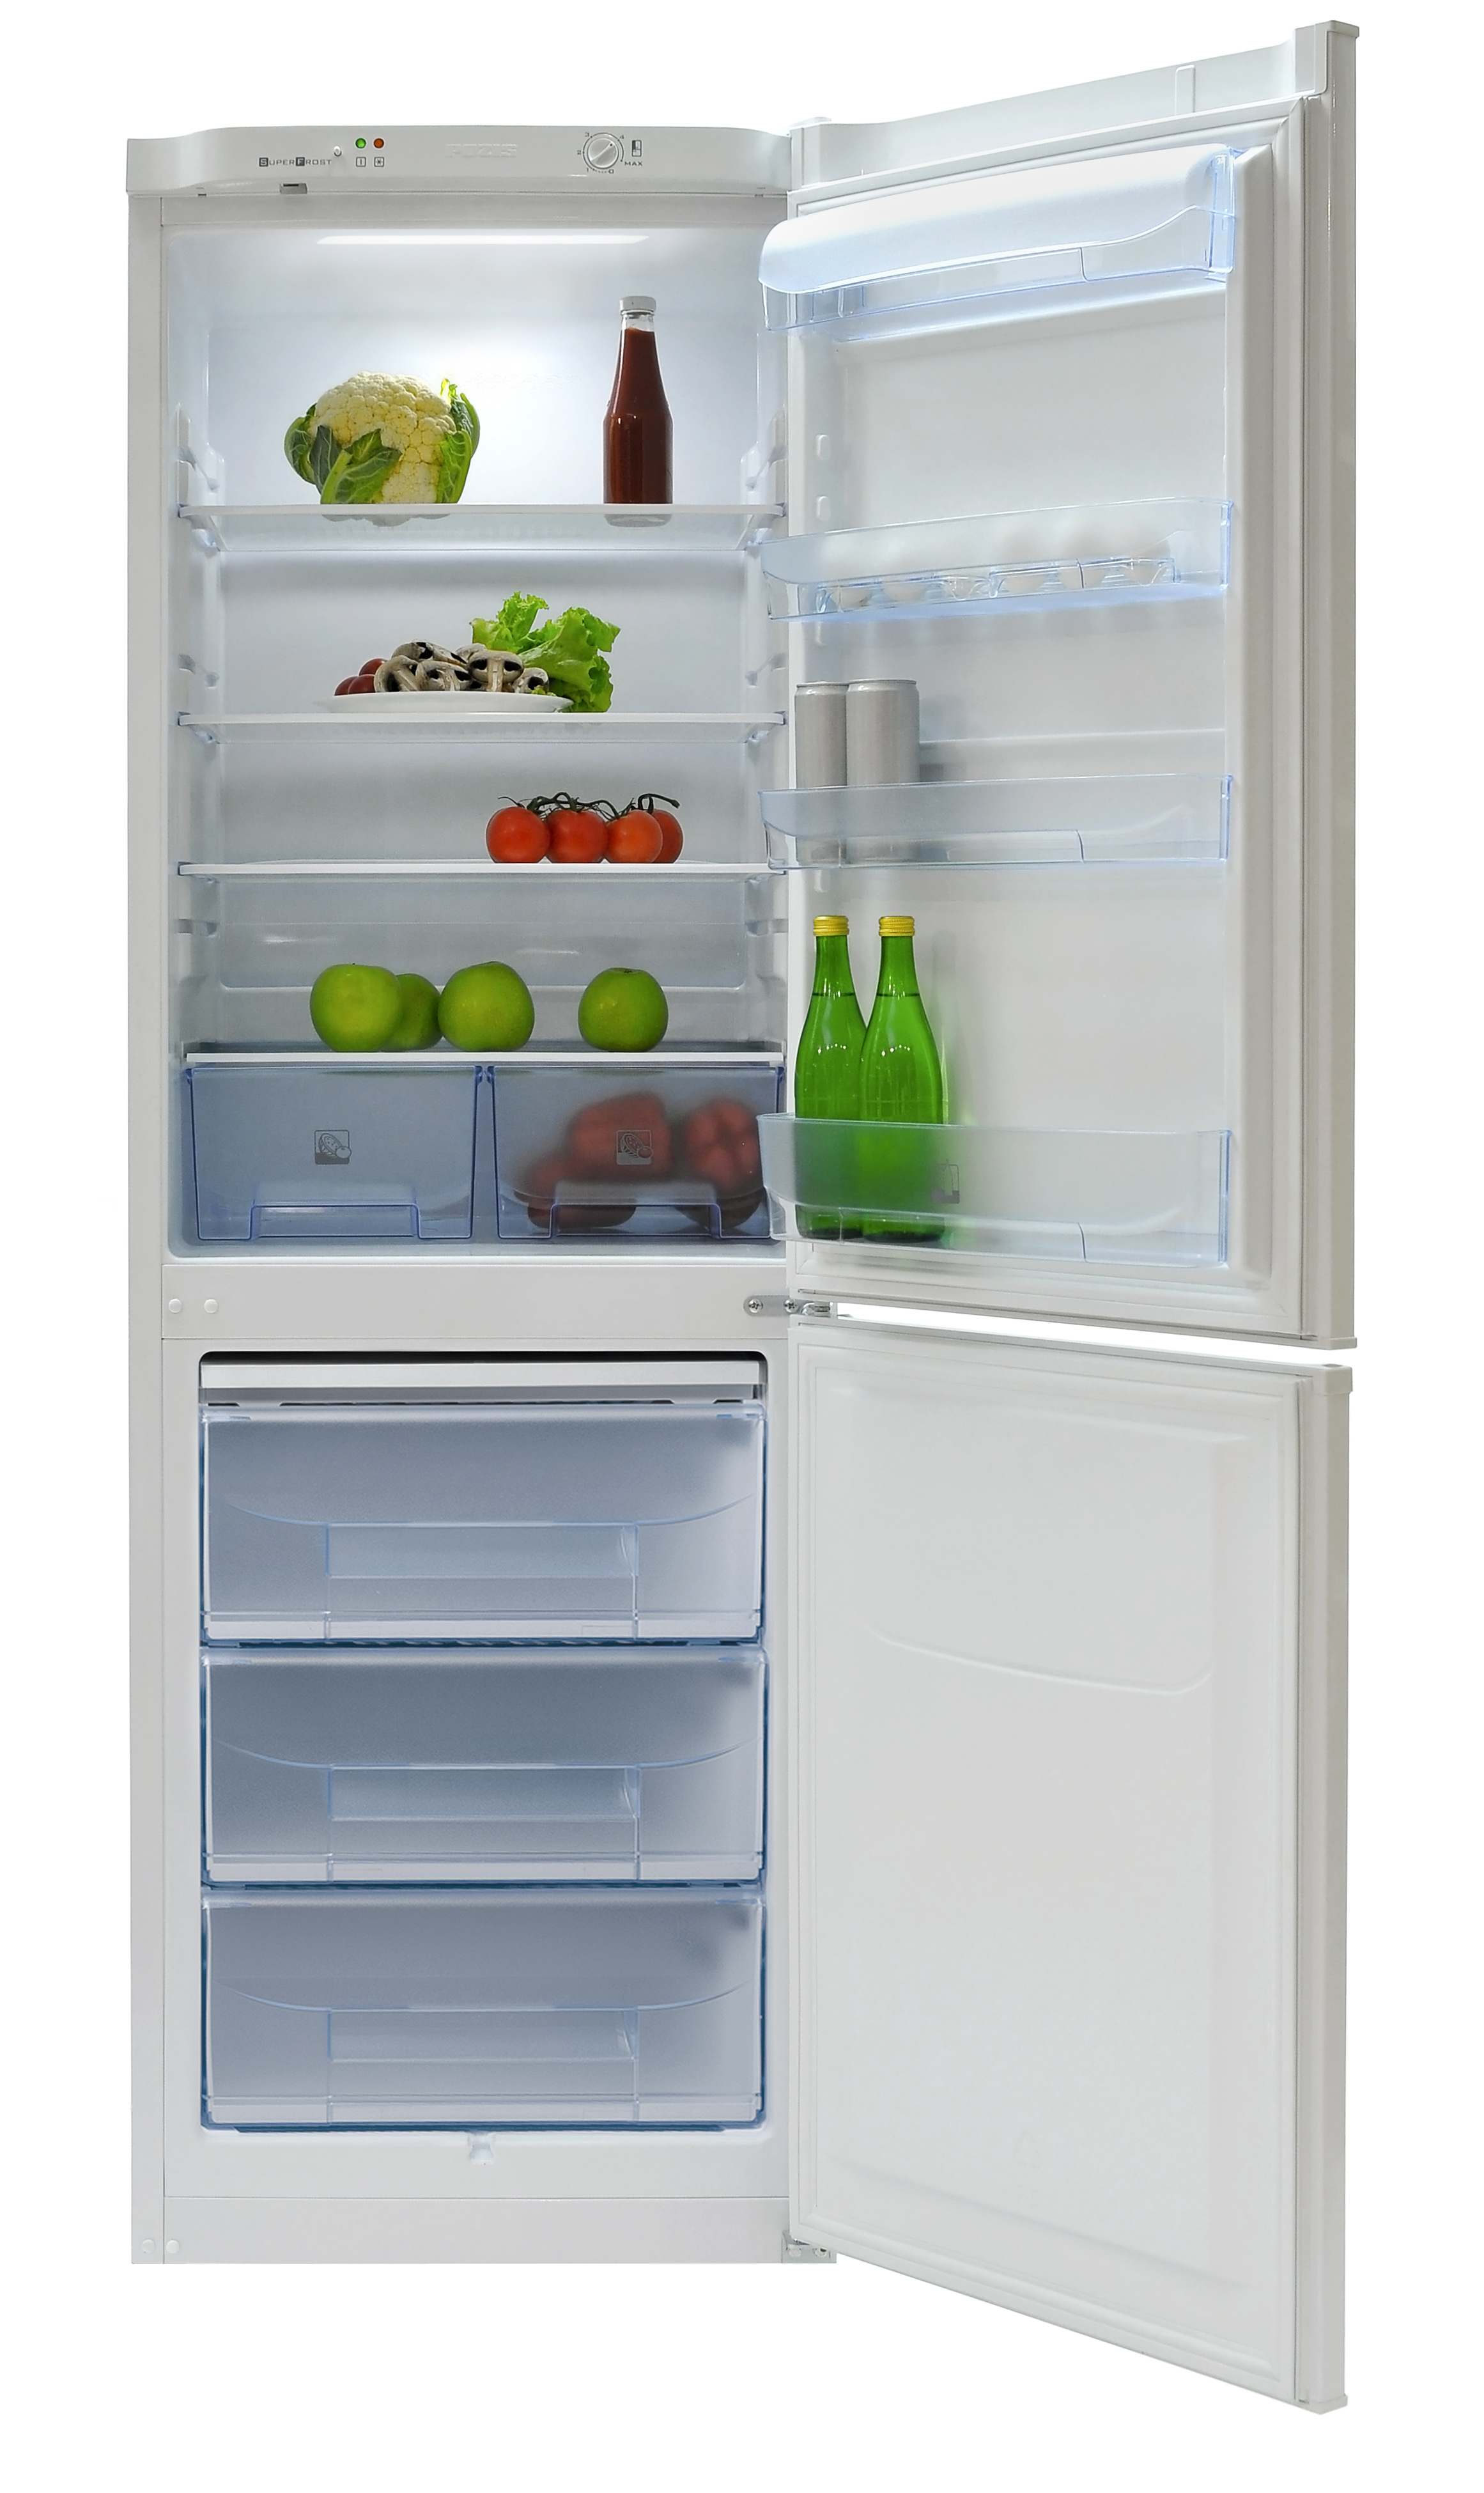 POZIS RK-139 серебристый металлопласт Холодильник